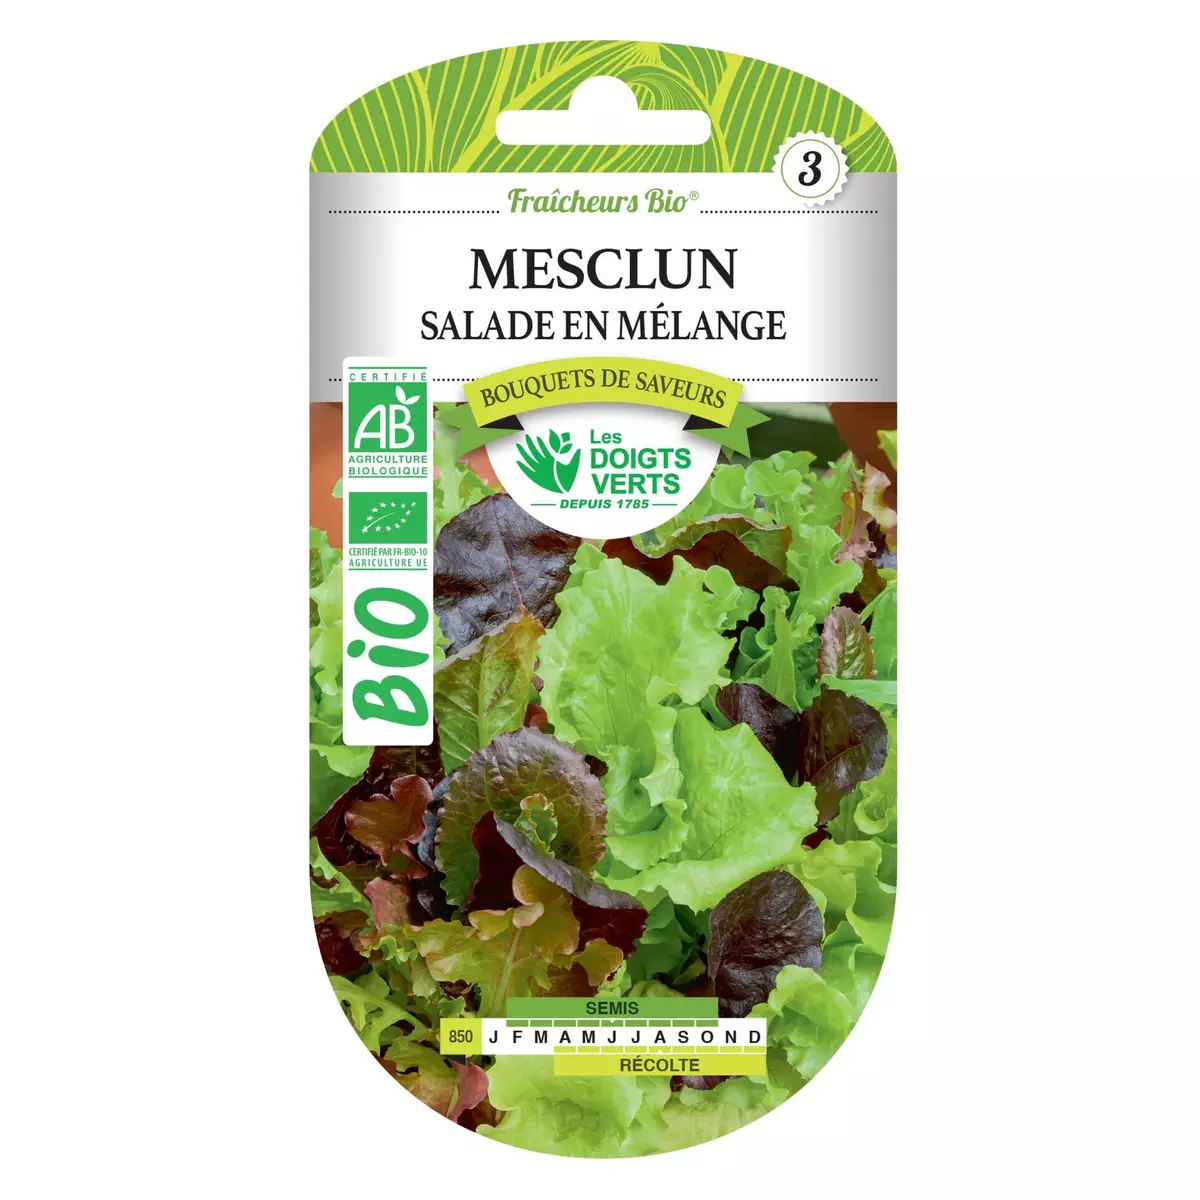 LES DOIGTS VERTS Graines mesclun salade en mélange BIO Les Doigts Verts